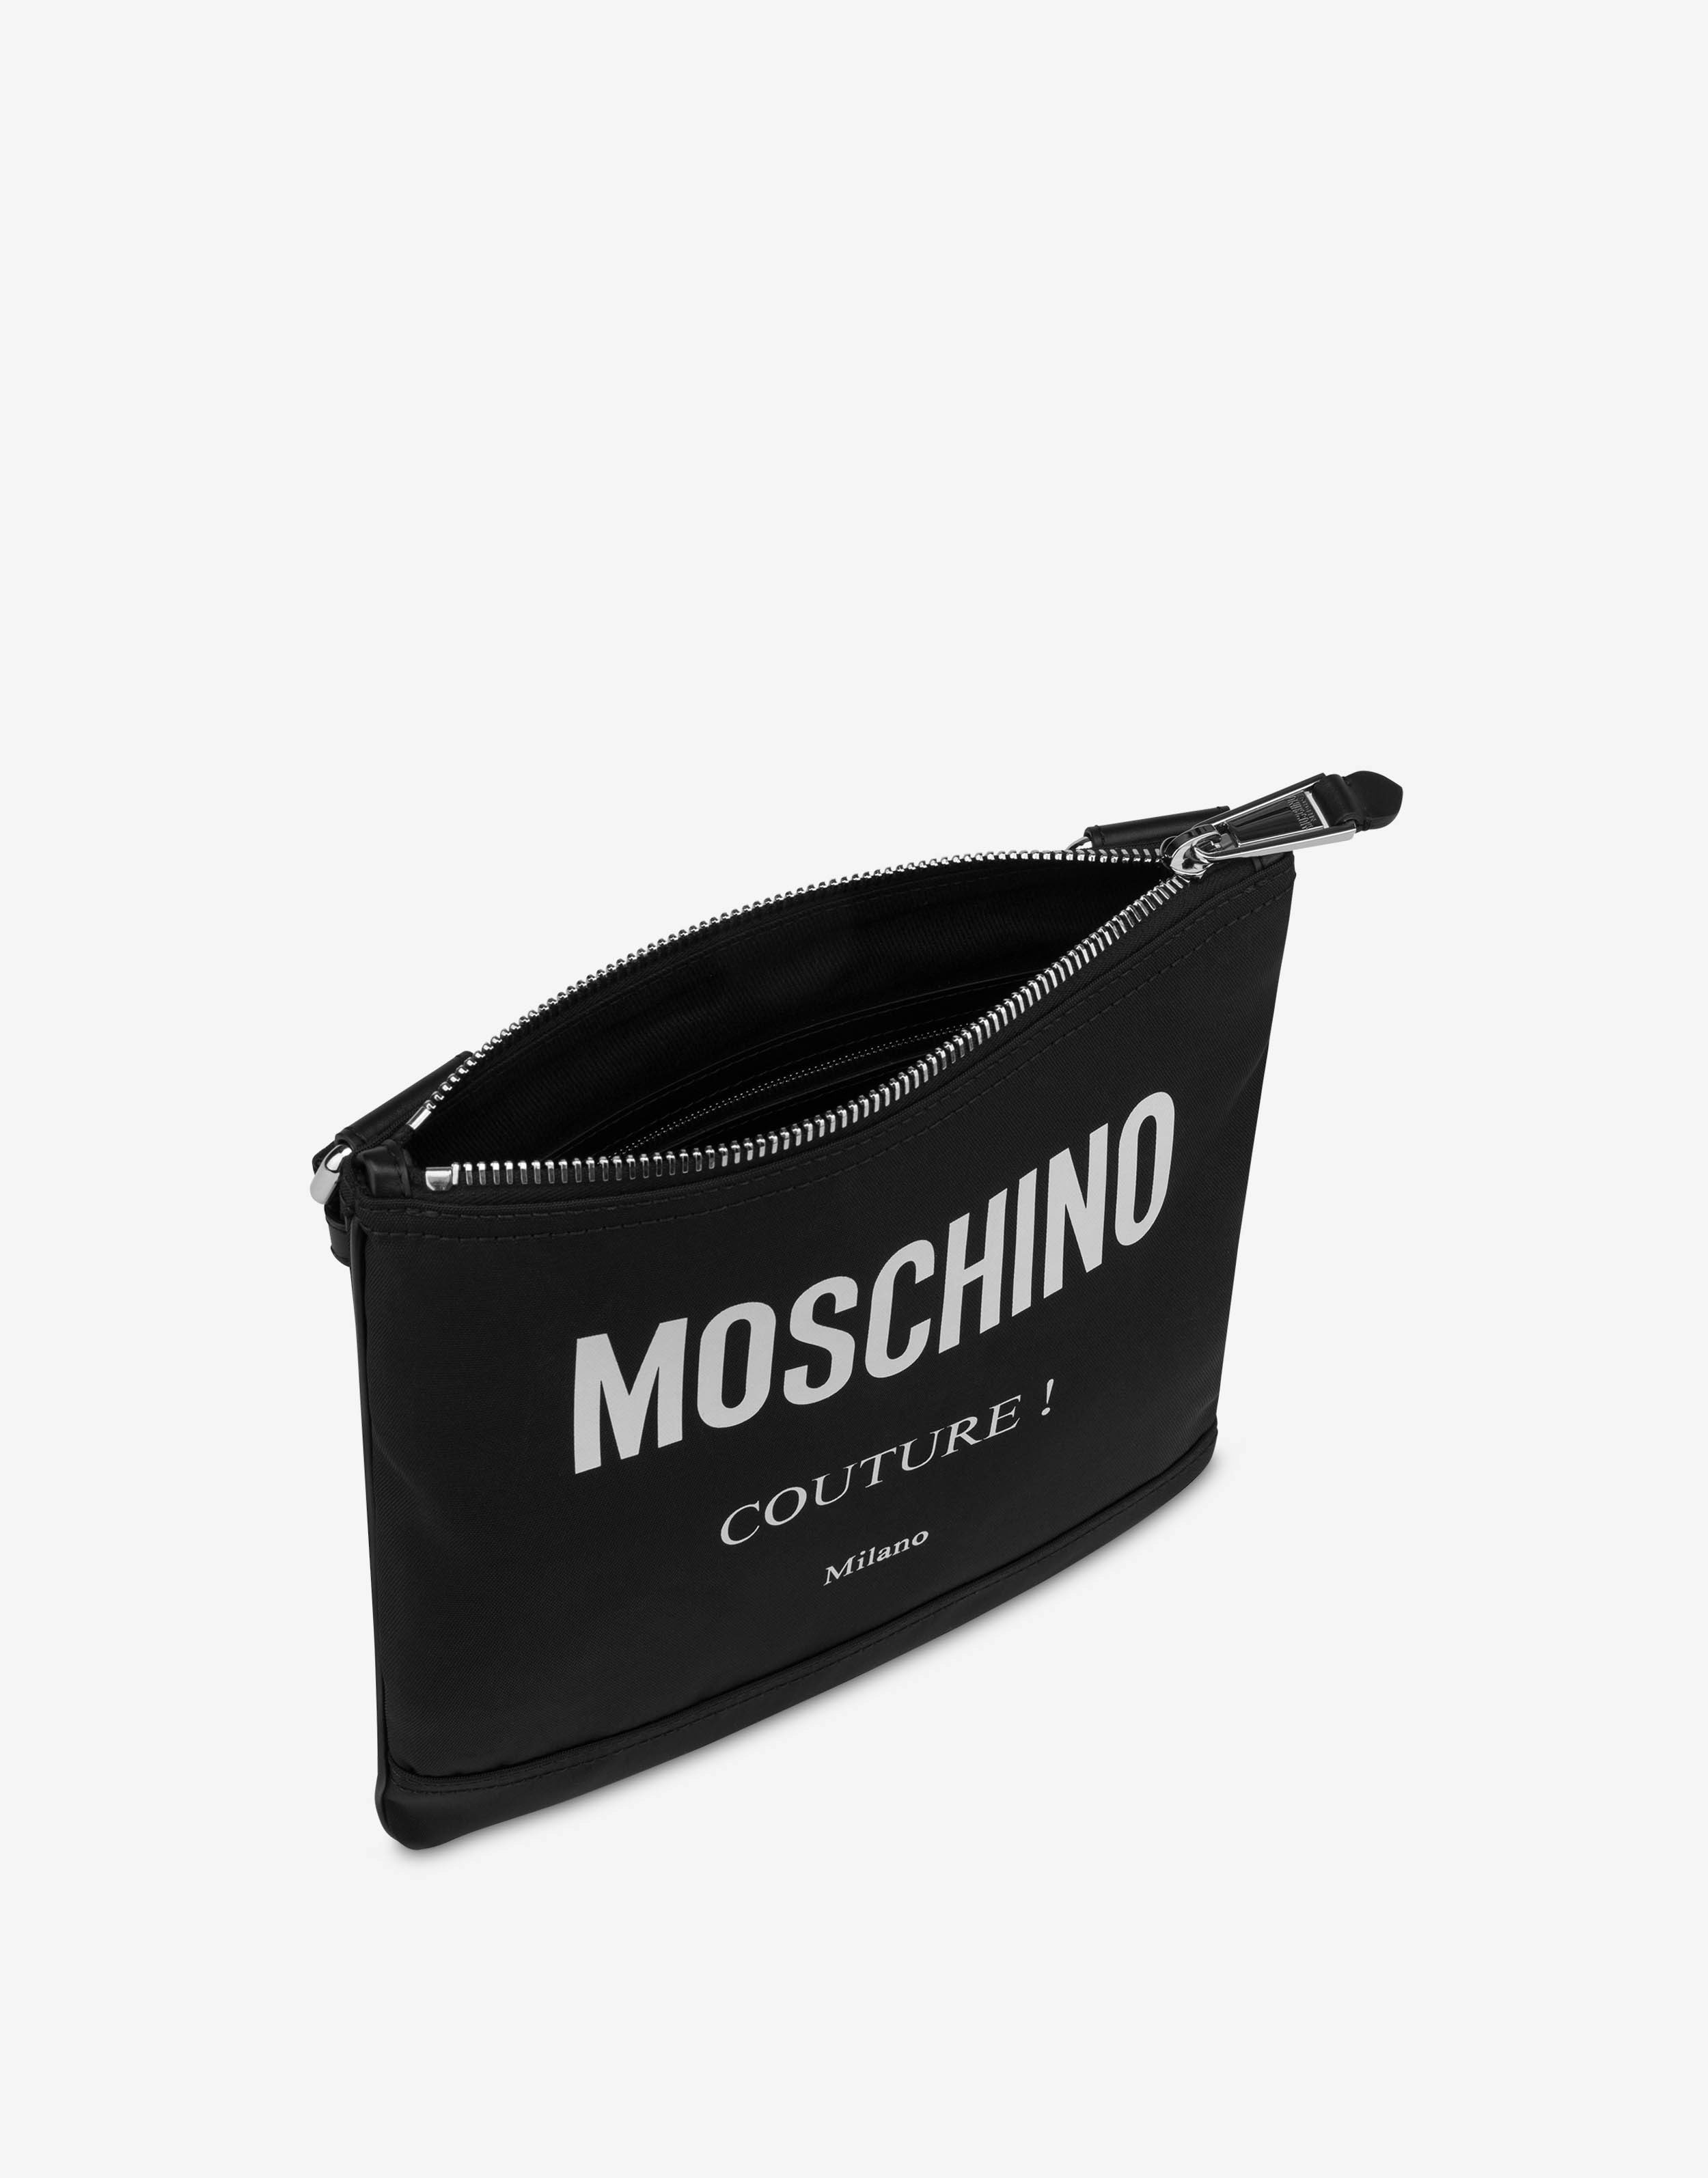 Moschino Couture shoulder bag 1